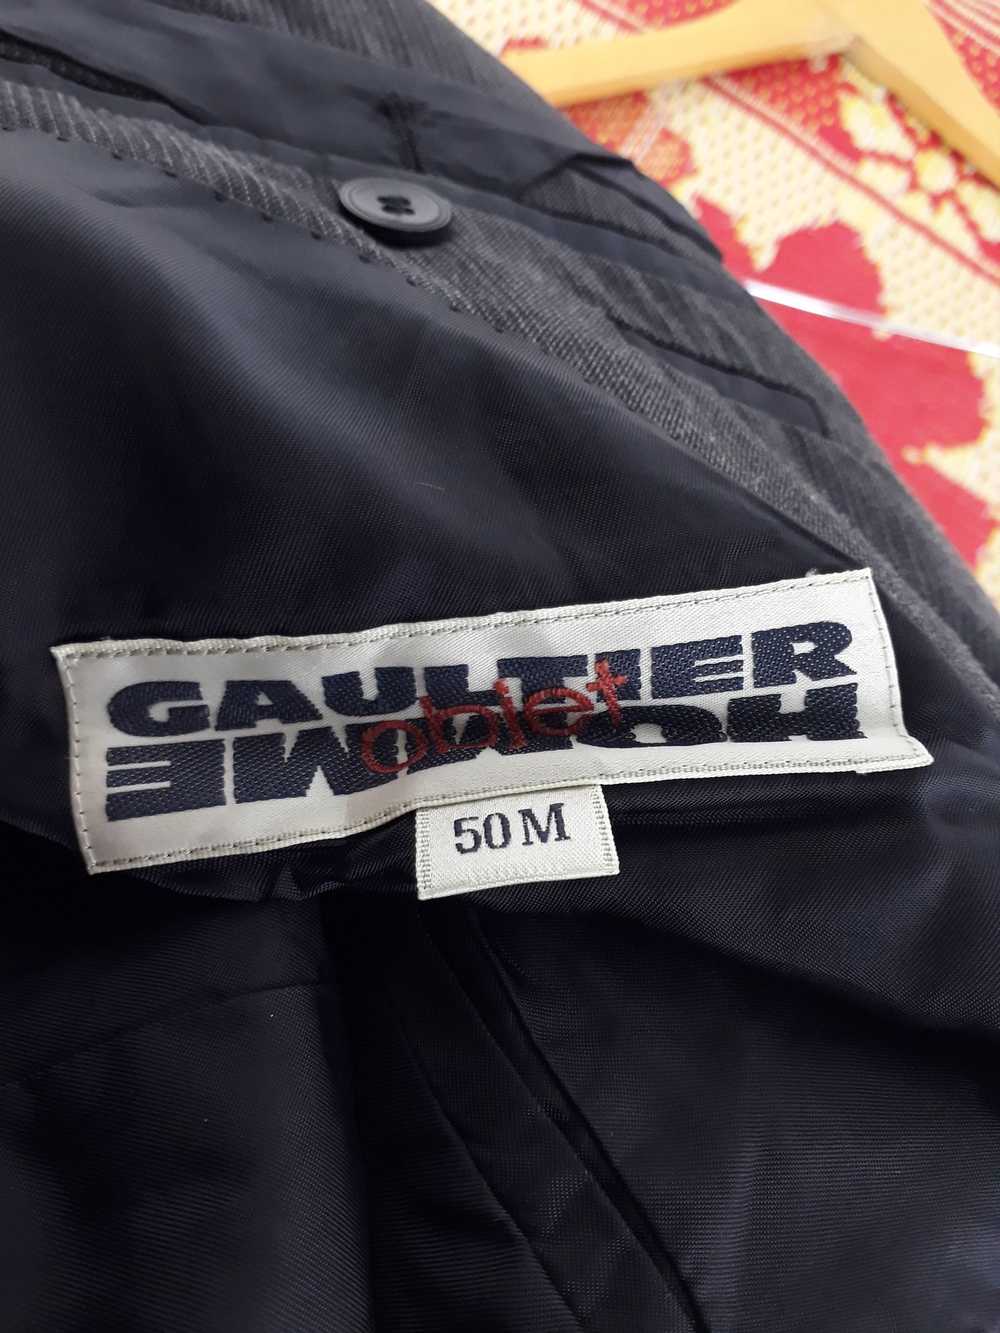 Gaultier Homme Objet × Jean Paul Gaultier GAULTIE… - image 7